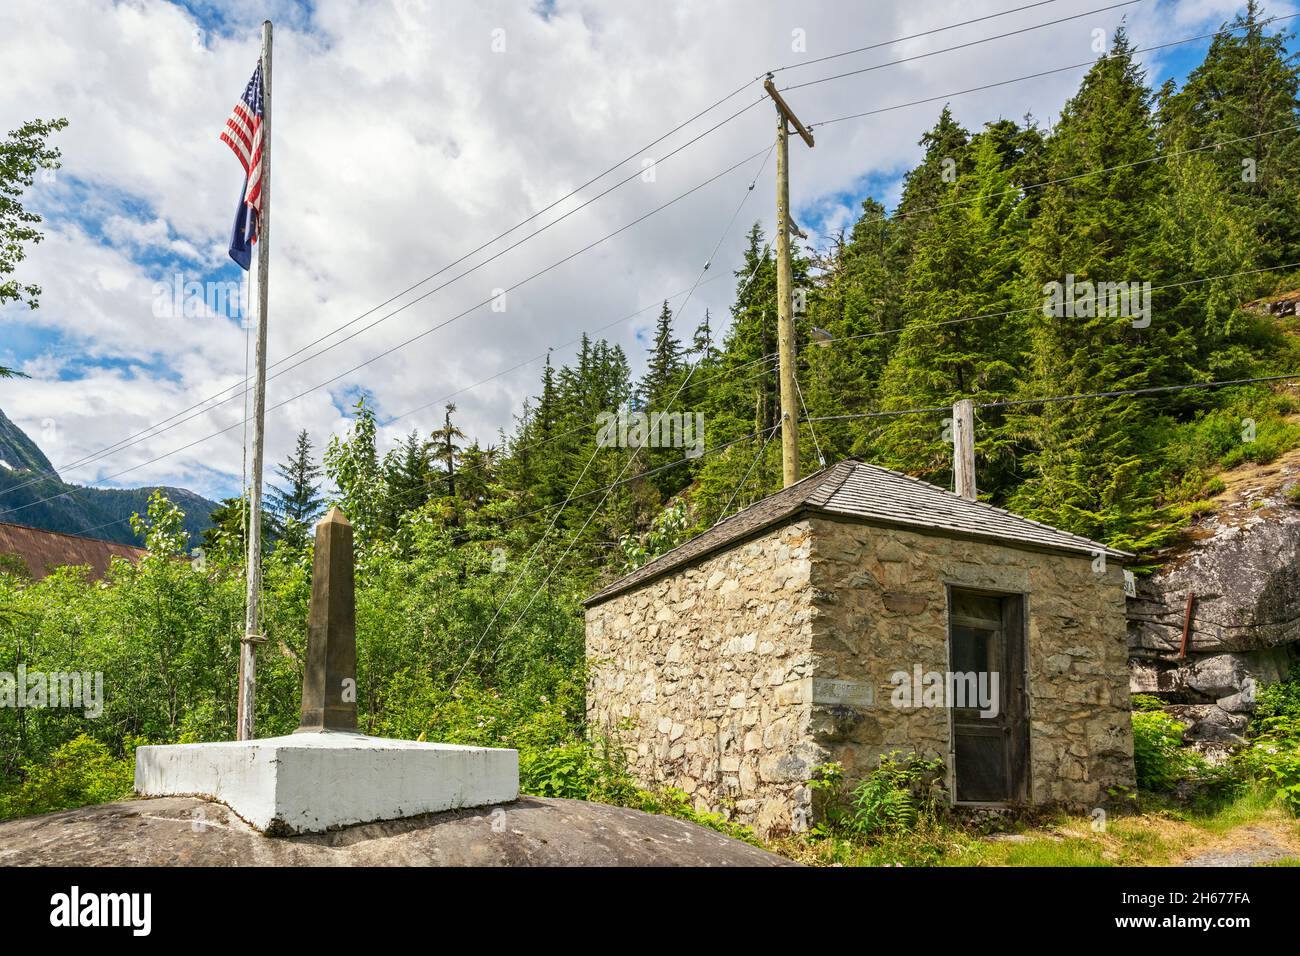 USA, Alaska, Hyder, historische Grenzstation, Obelisk markiert Grenze zu Kanada Stockfoto